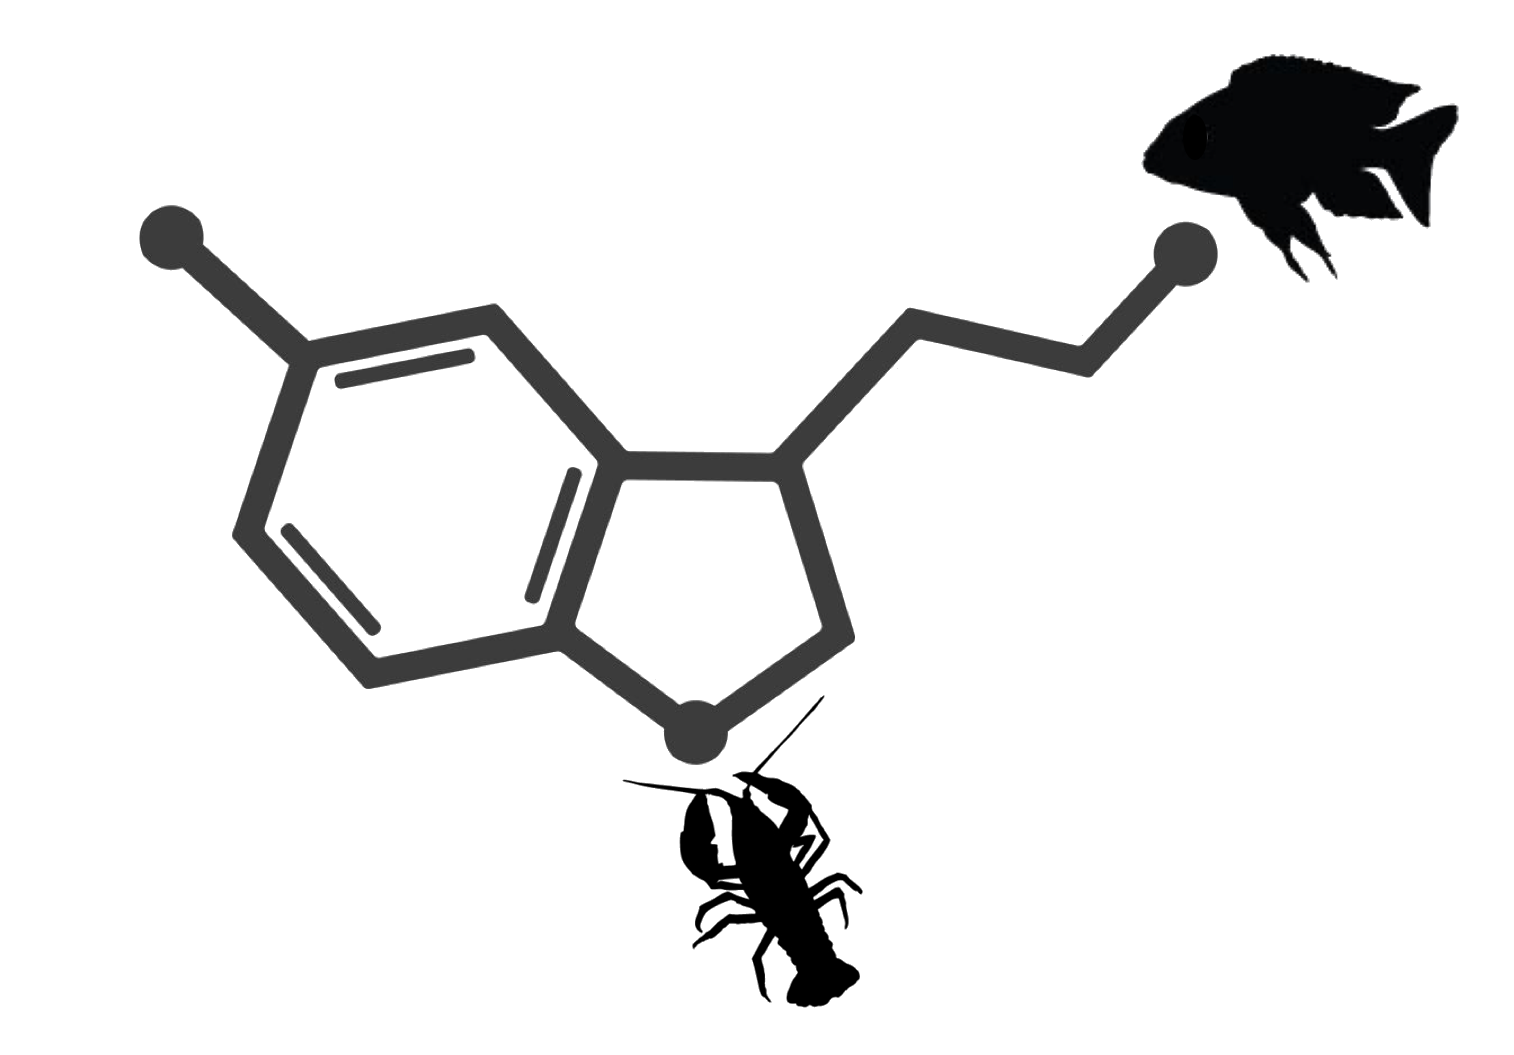 serotonin molecular with fish and crayfish